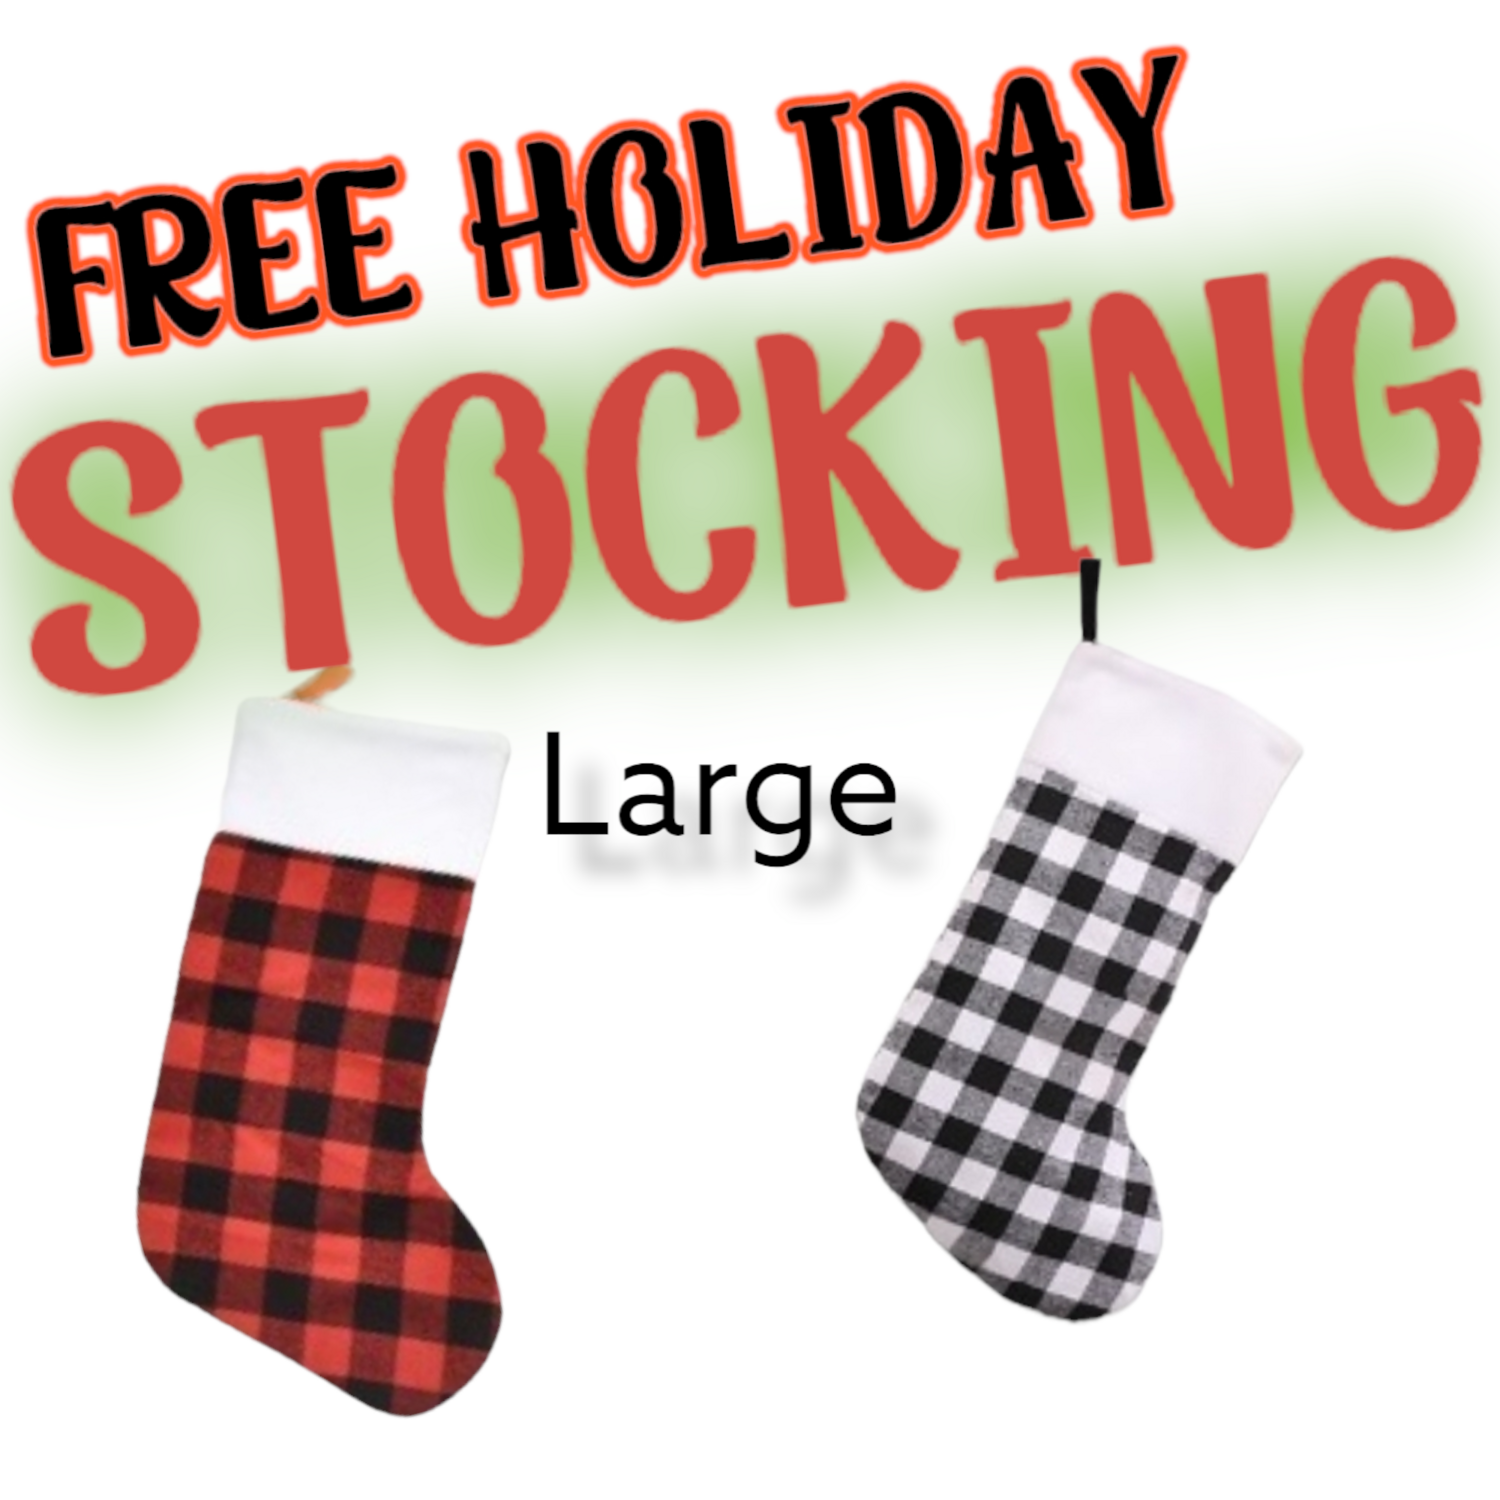 Free large mystery stocking